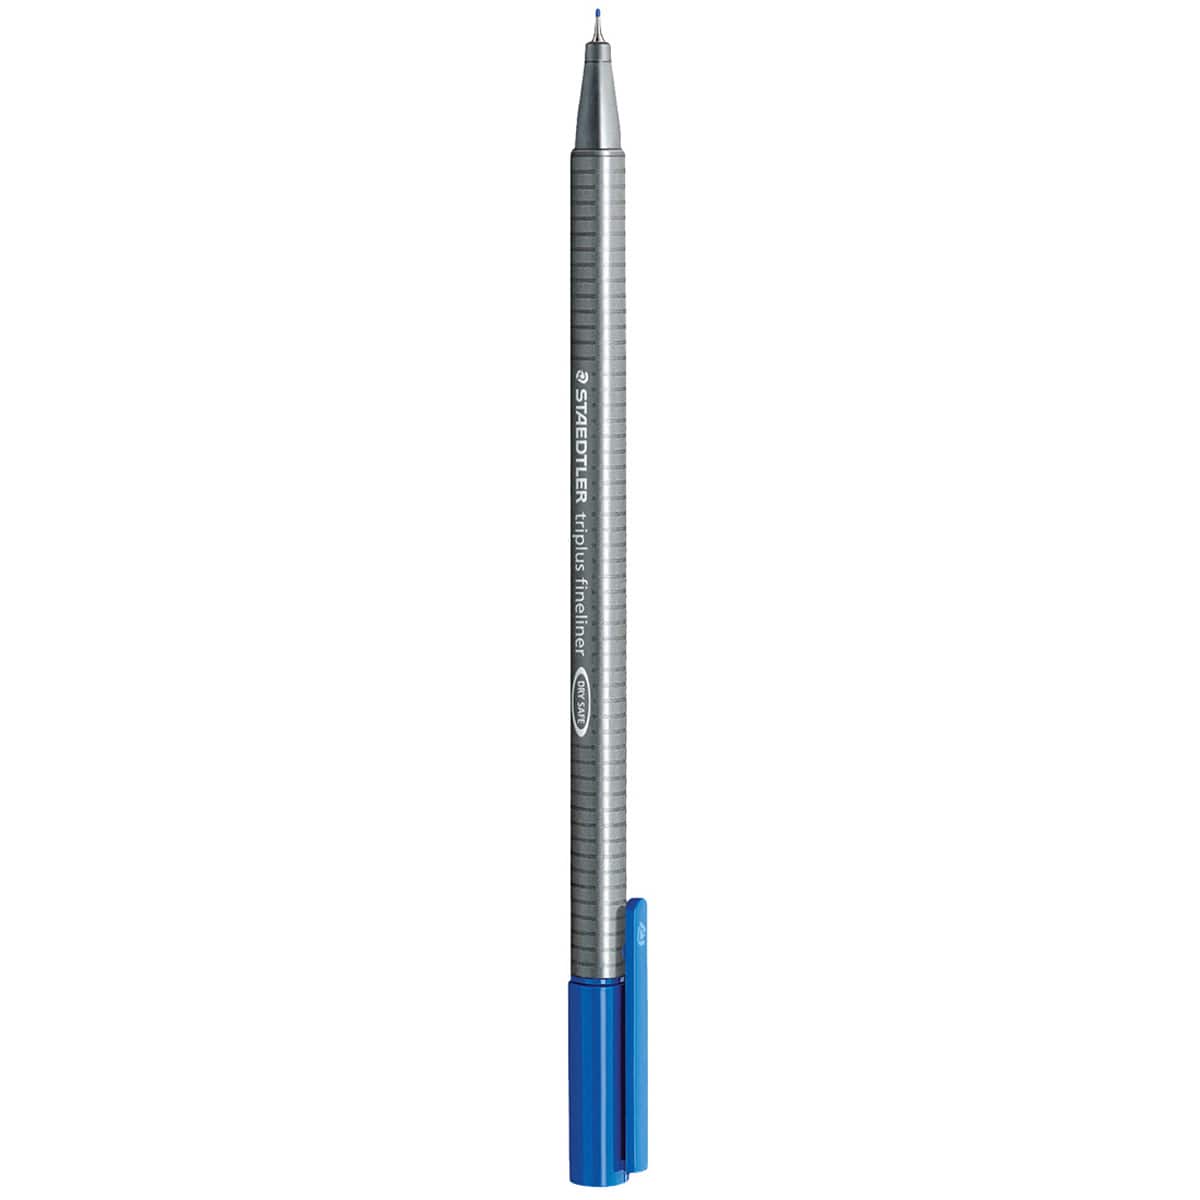 Staedtler Triplus Fineliner Pen - Pale Blue, BLICK Art Materials